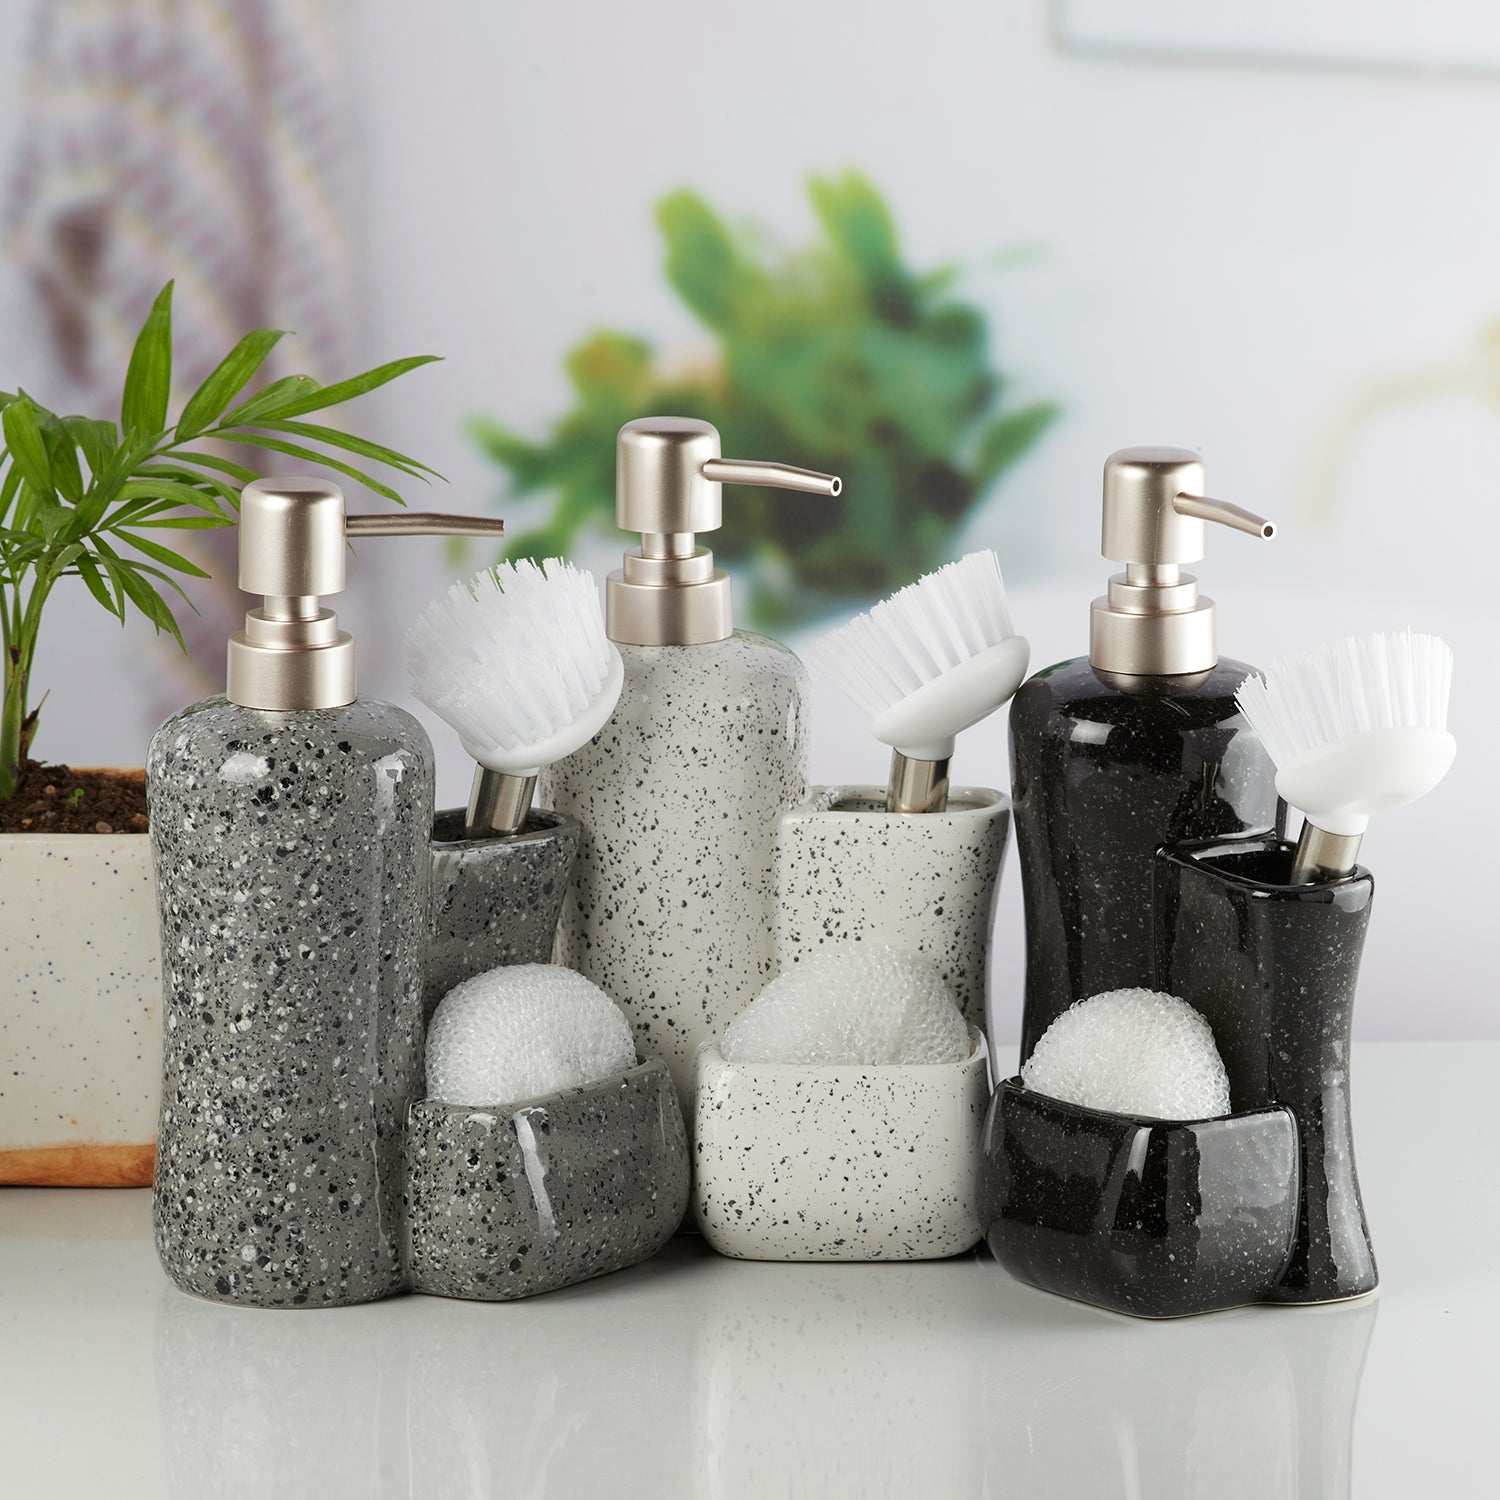 Ceramic Soap Dispenser handwash Pump for Bathroom, Set of 1, White (10306)